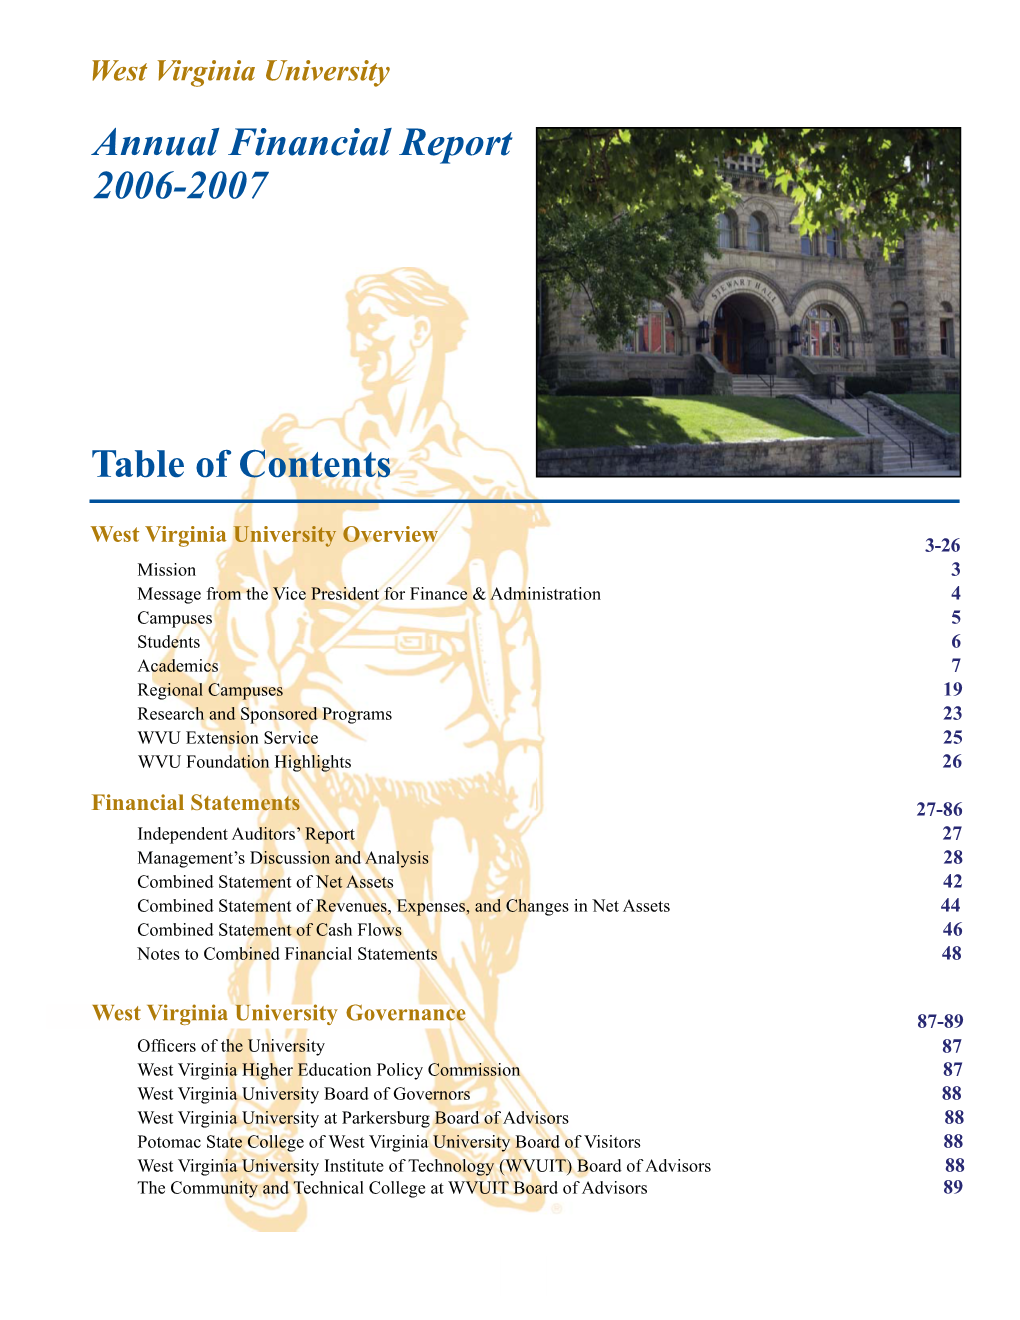 West Virginia University Annual Financial Report 2006-2007